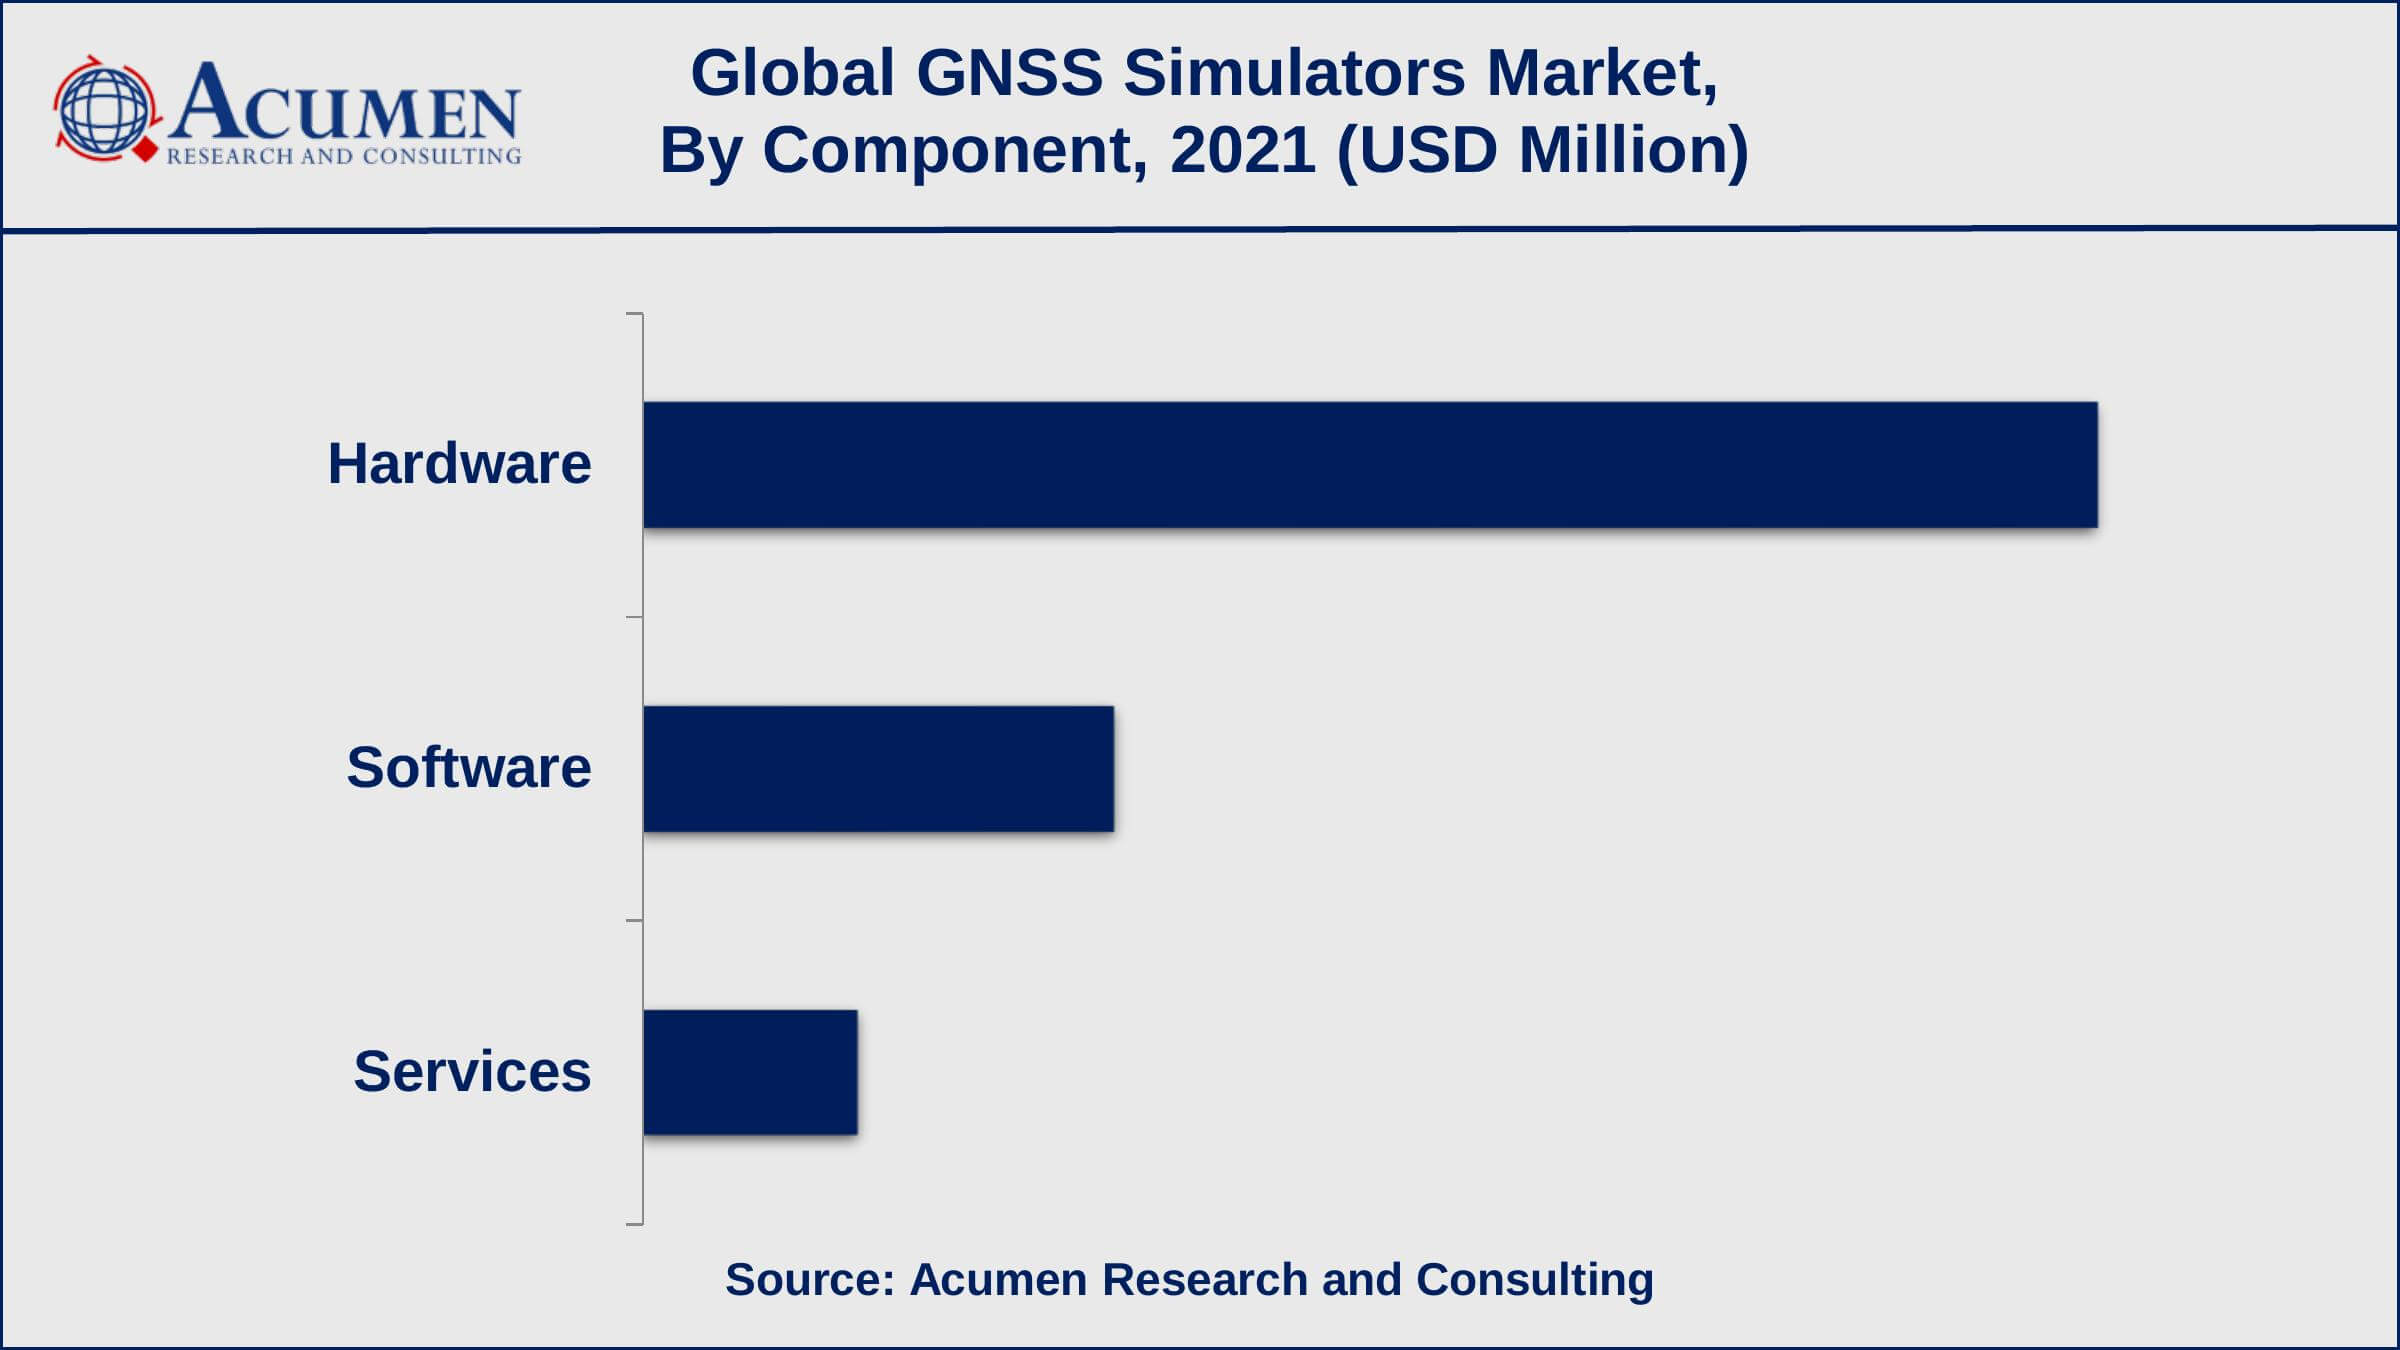 Global GNSS Simulators Market Dynamics